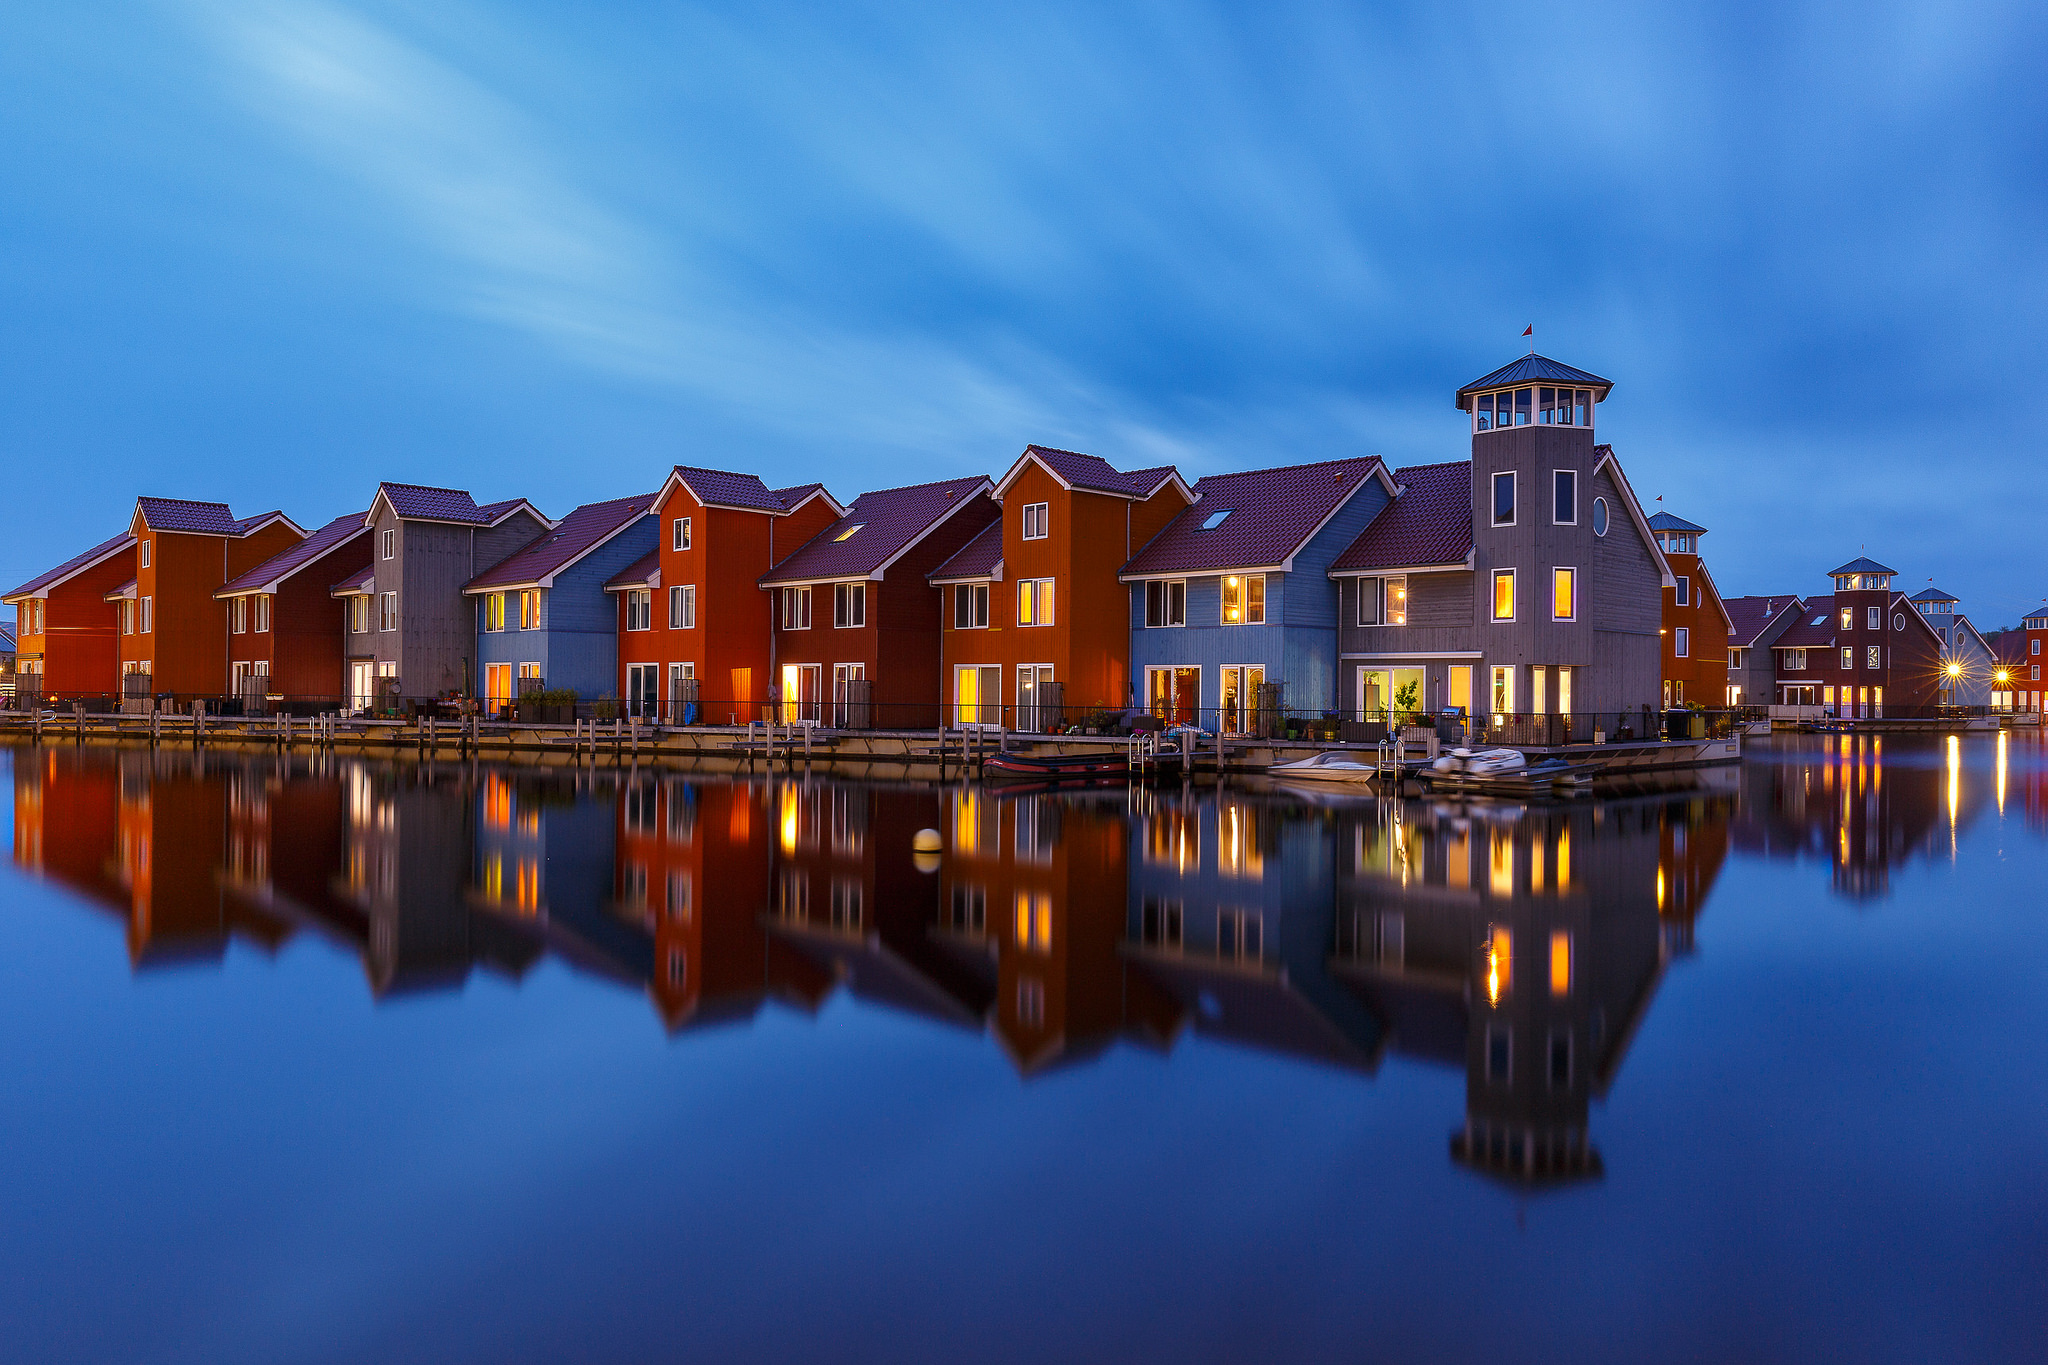 General 2048x1365 landscape water reflection house boathouses sky architecture calm blue Netherlands Groningen